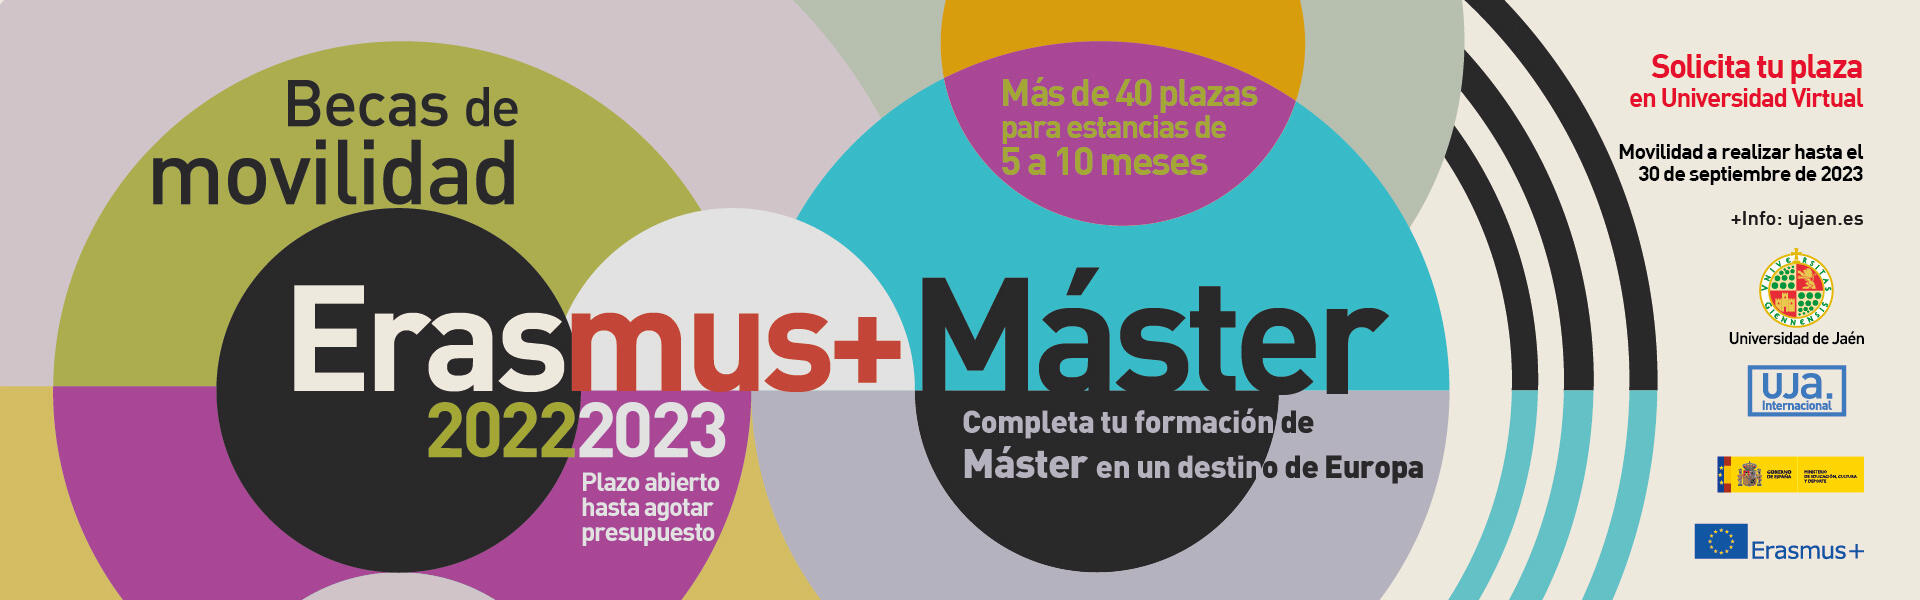 Convocatoria Erasmus+ KA103 Máster 2022/23